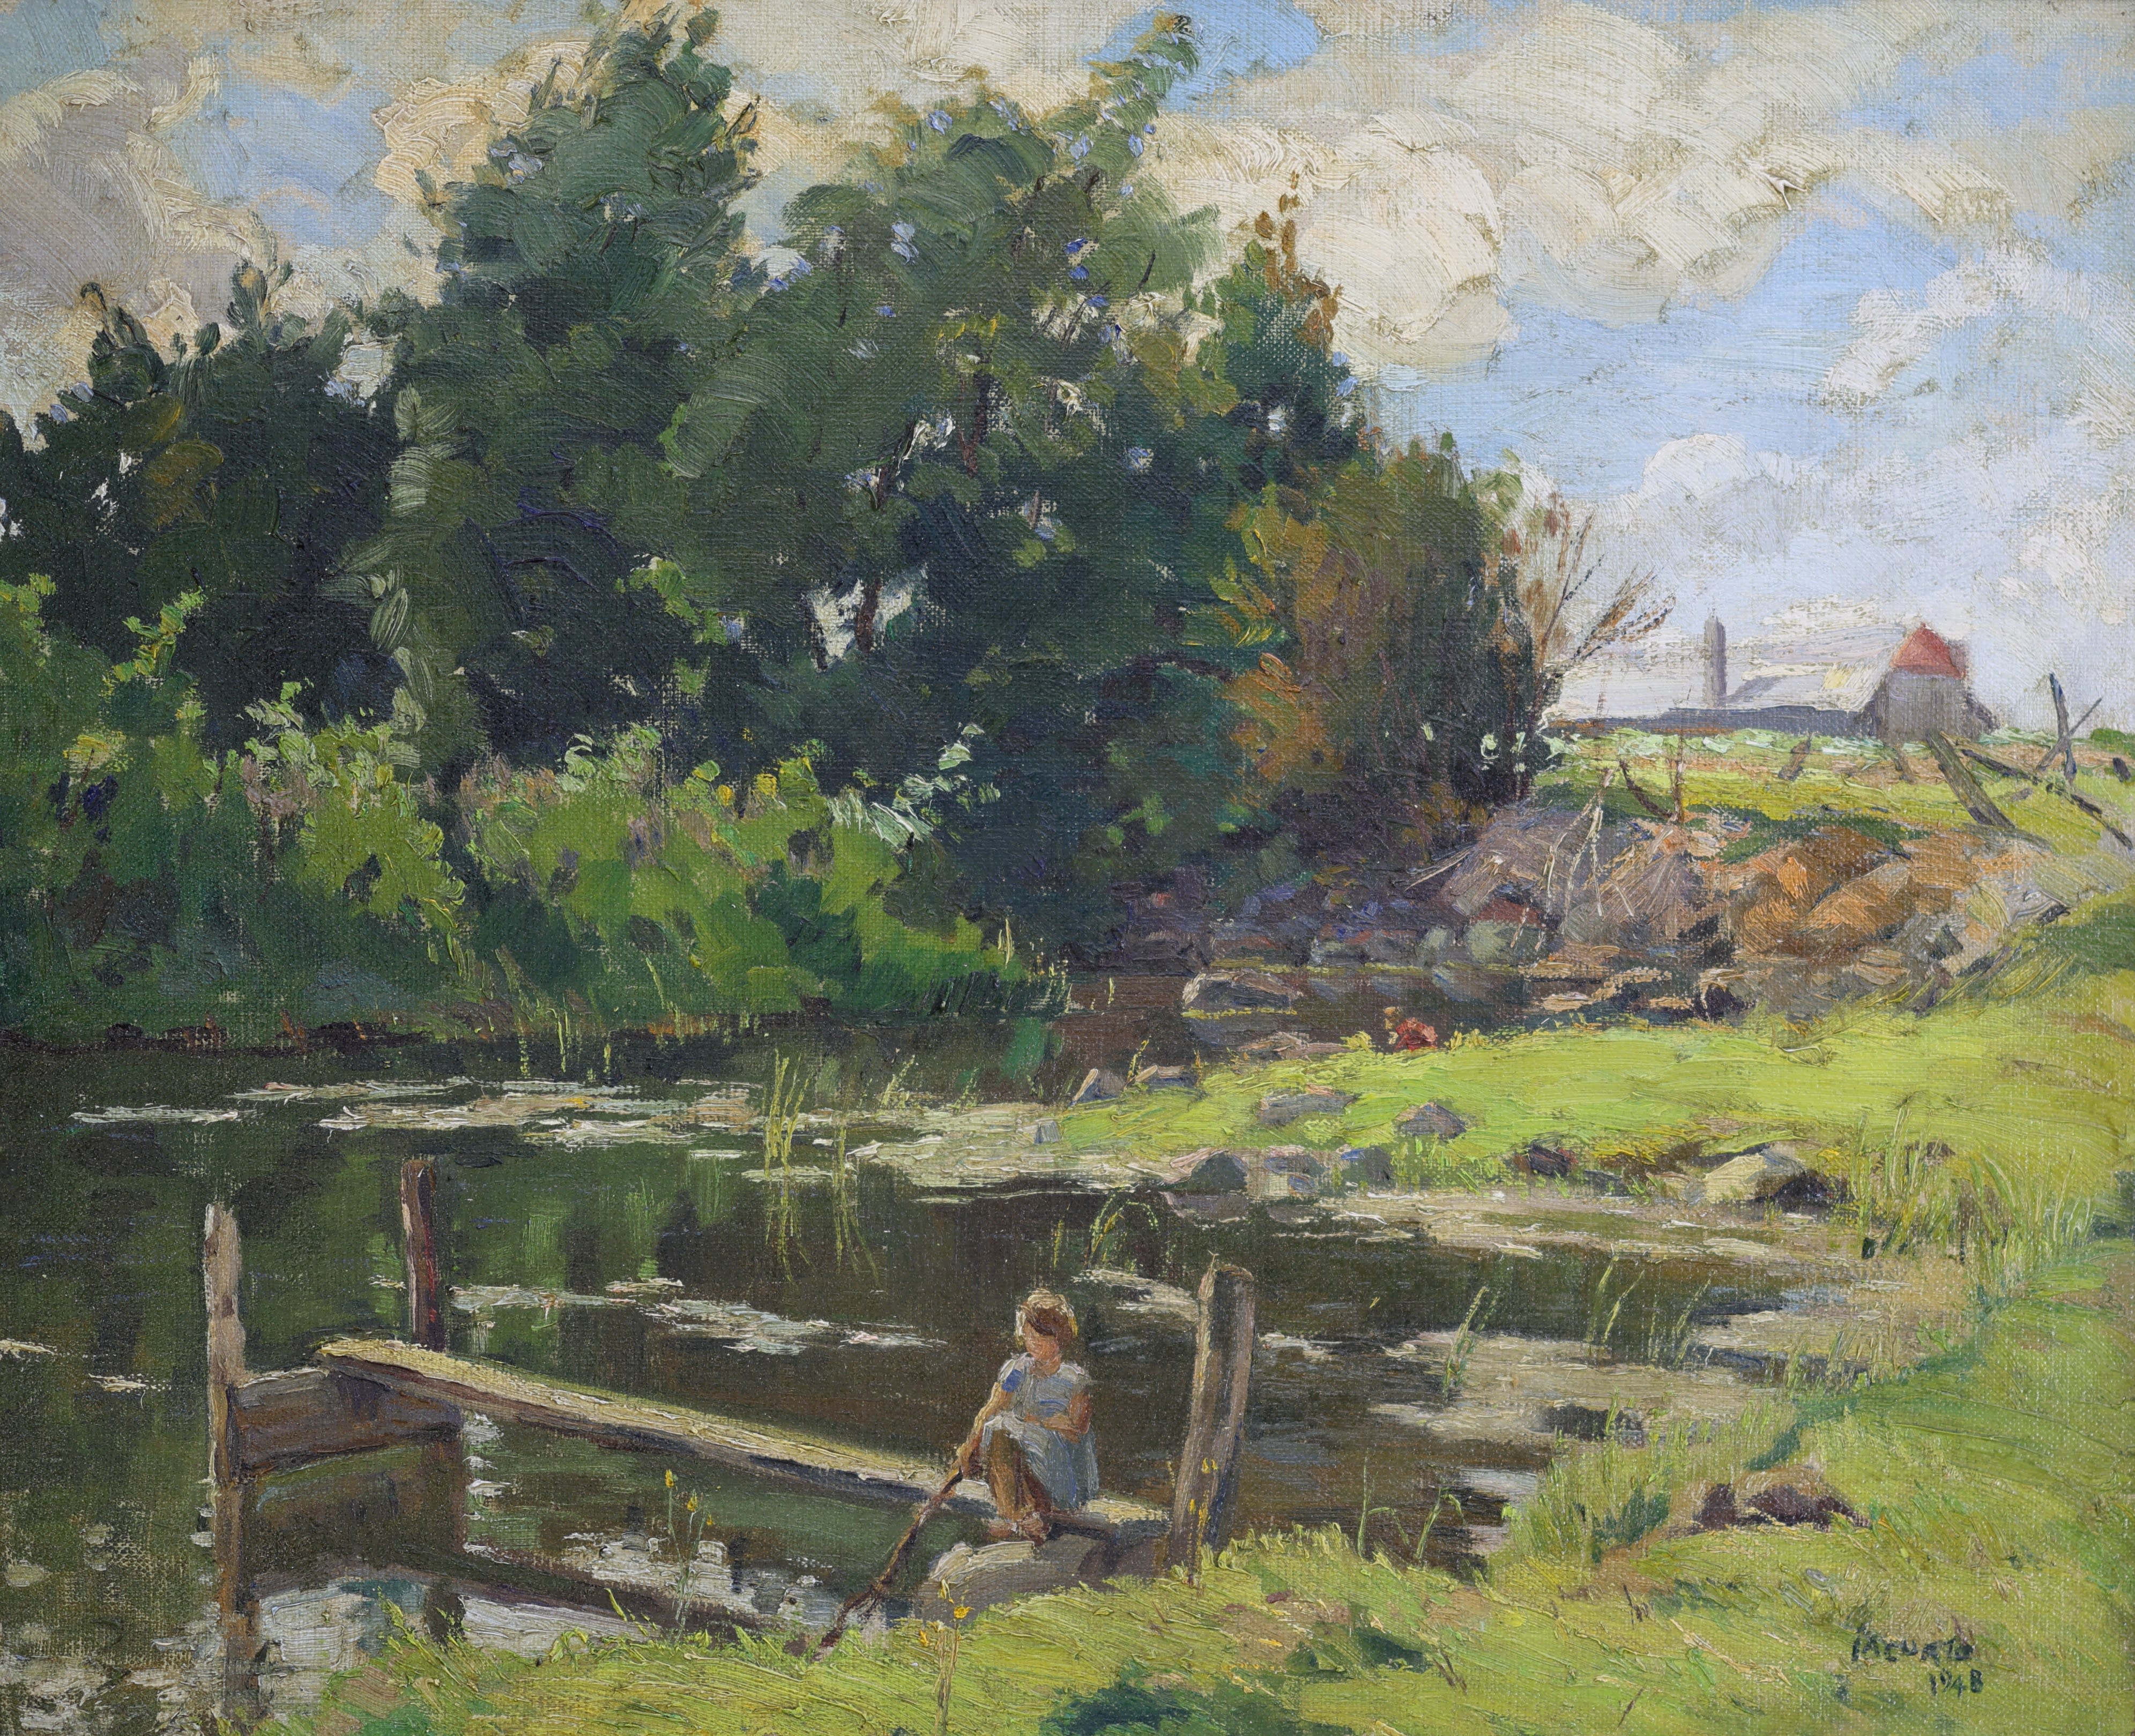 Francesco Iacurto; Summer by the Pond